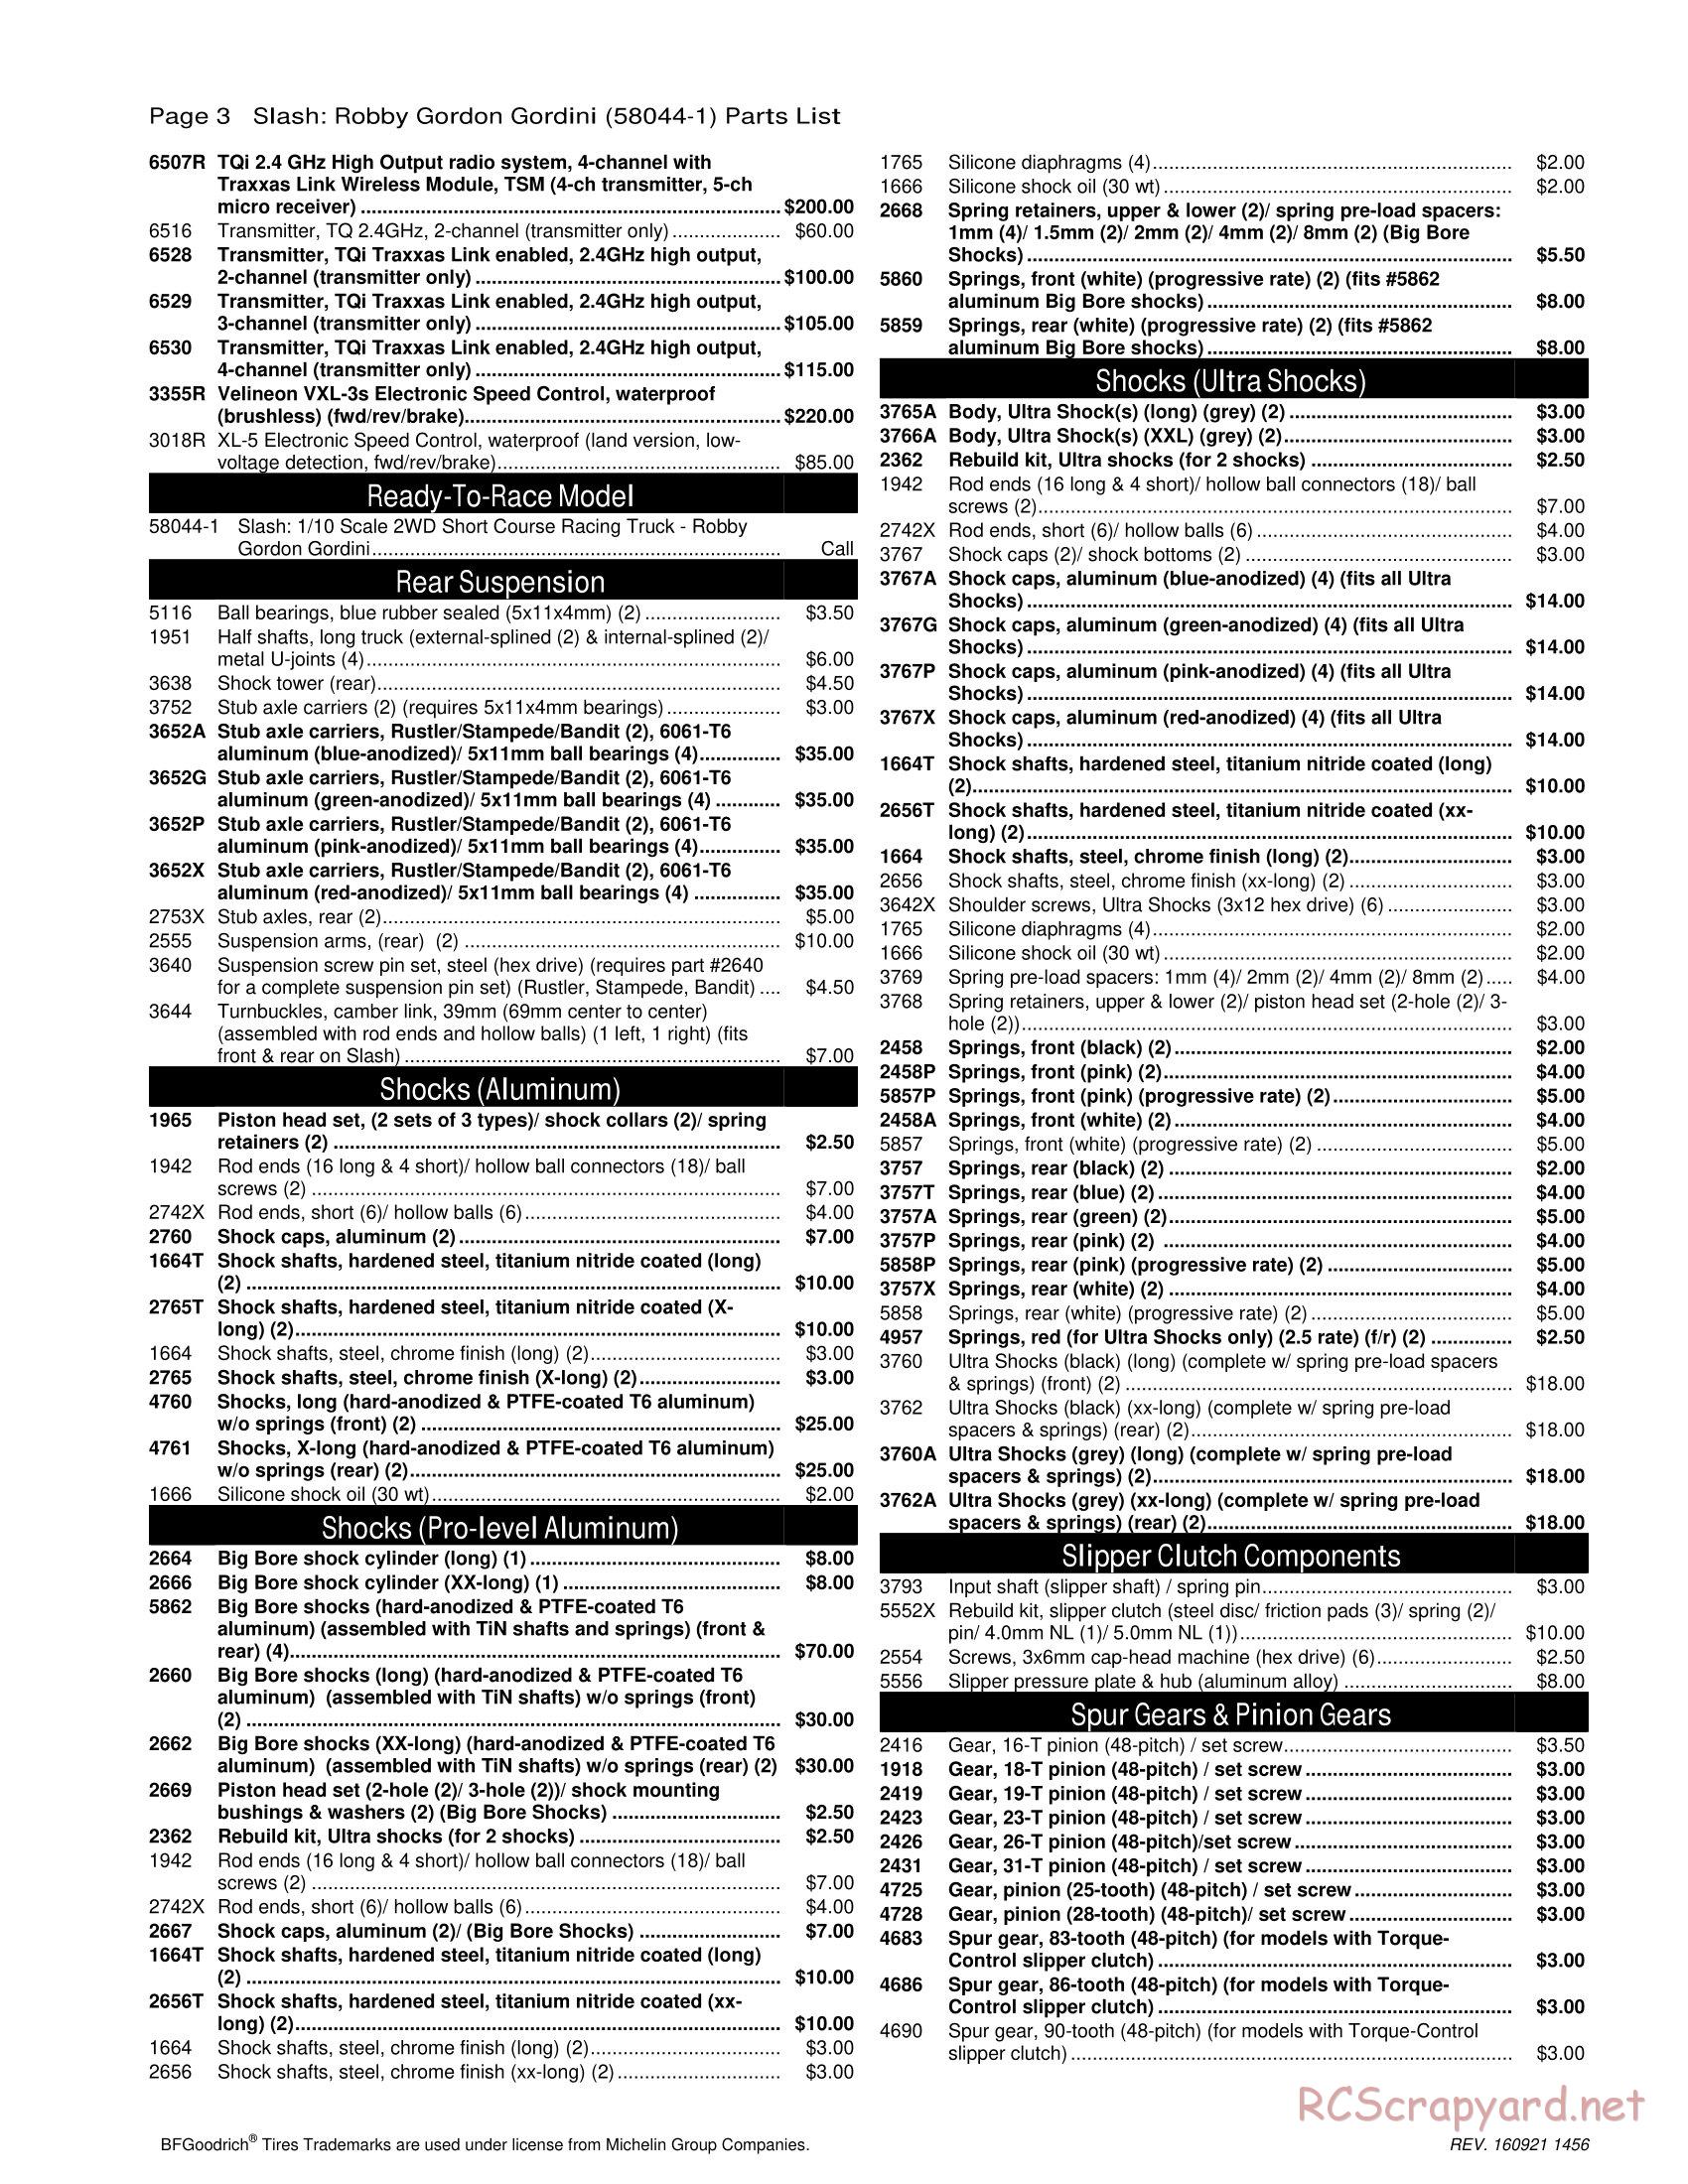 Traxxas - Slash 2WD Robby Gordon Dakar Ed (2014) - Parts List - Page 3